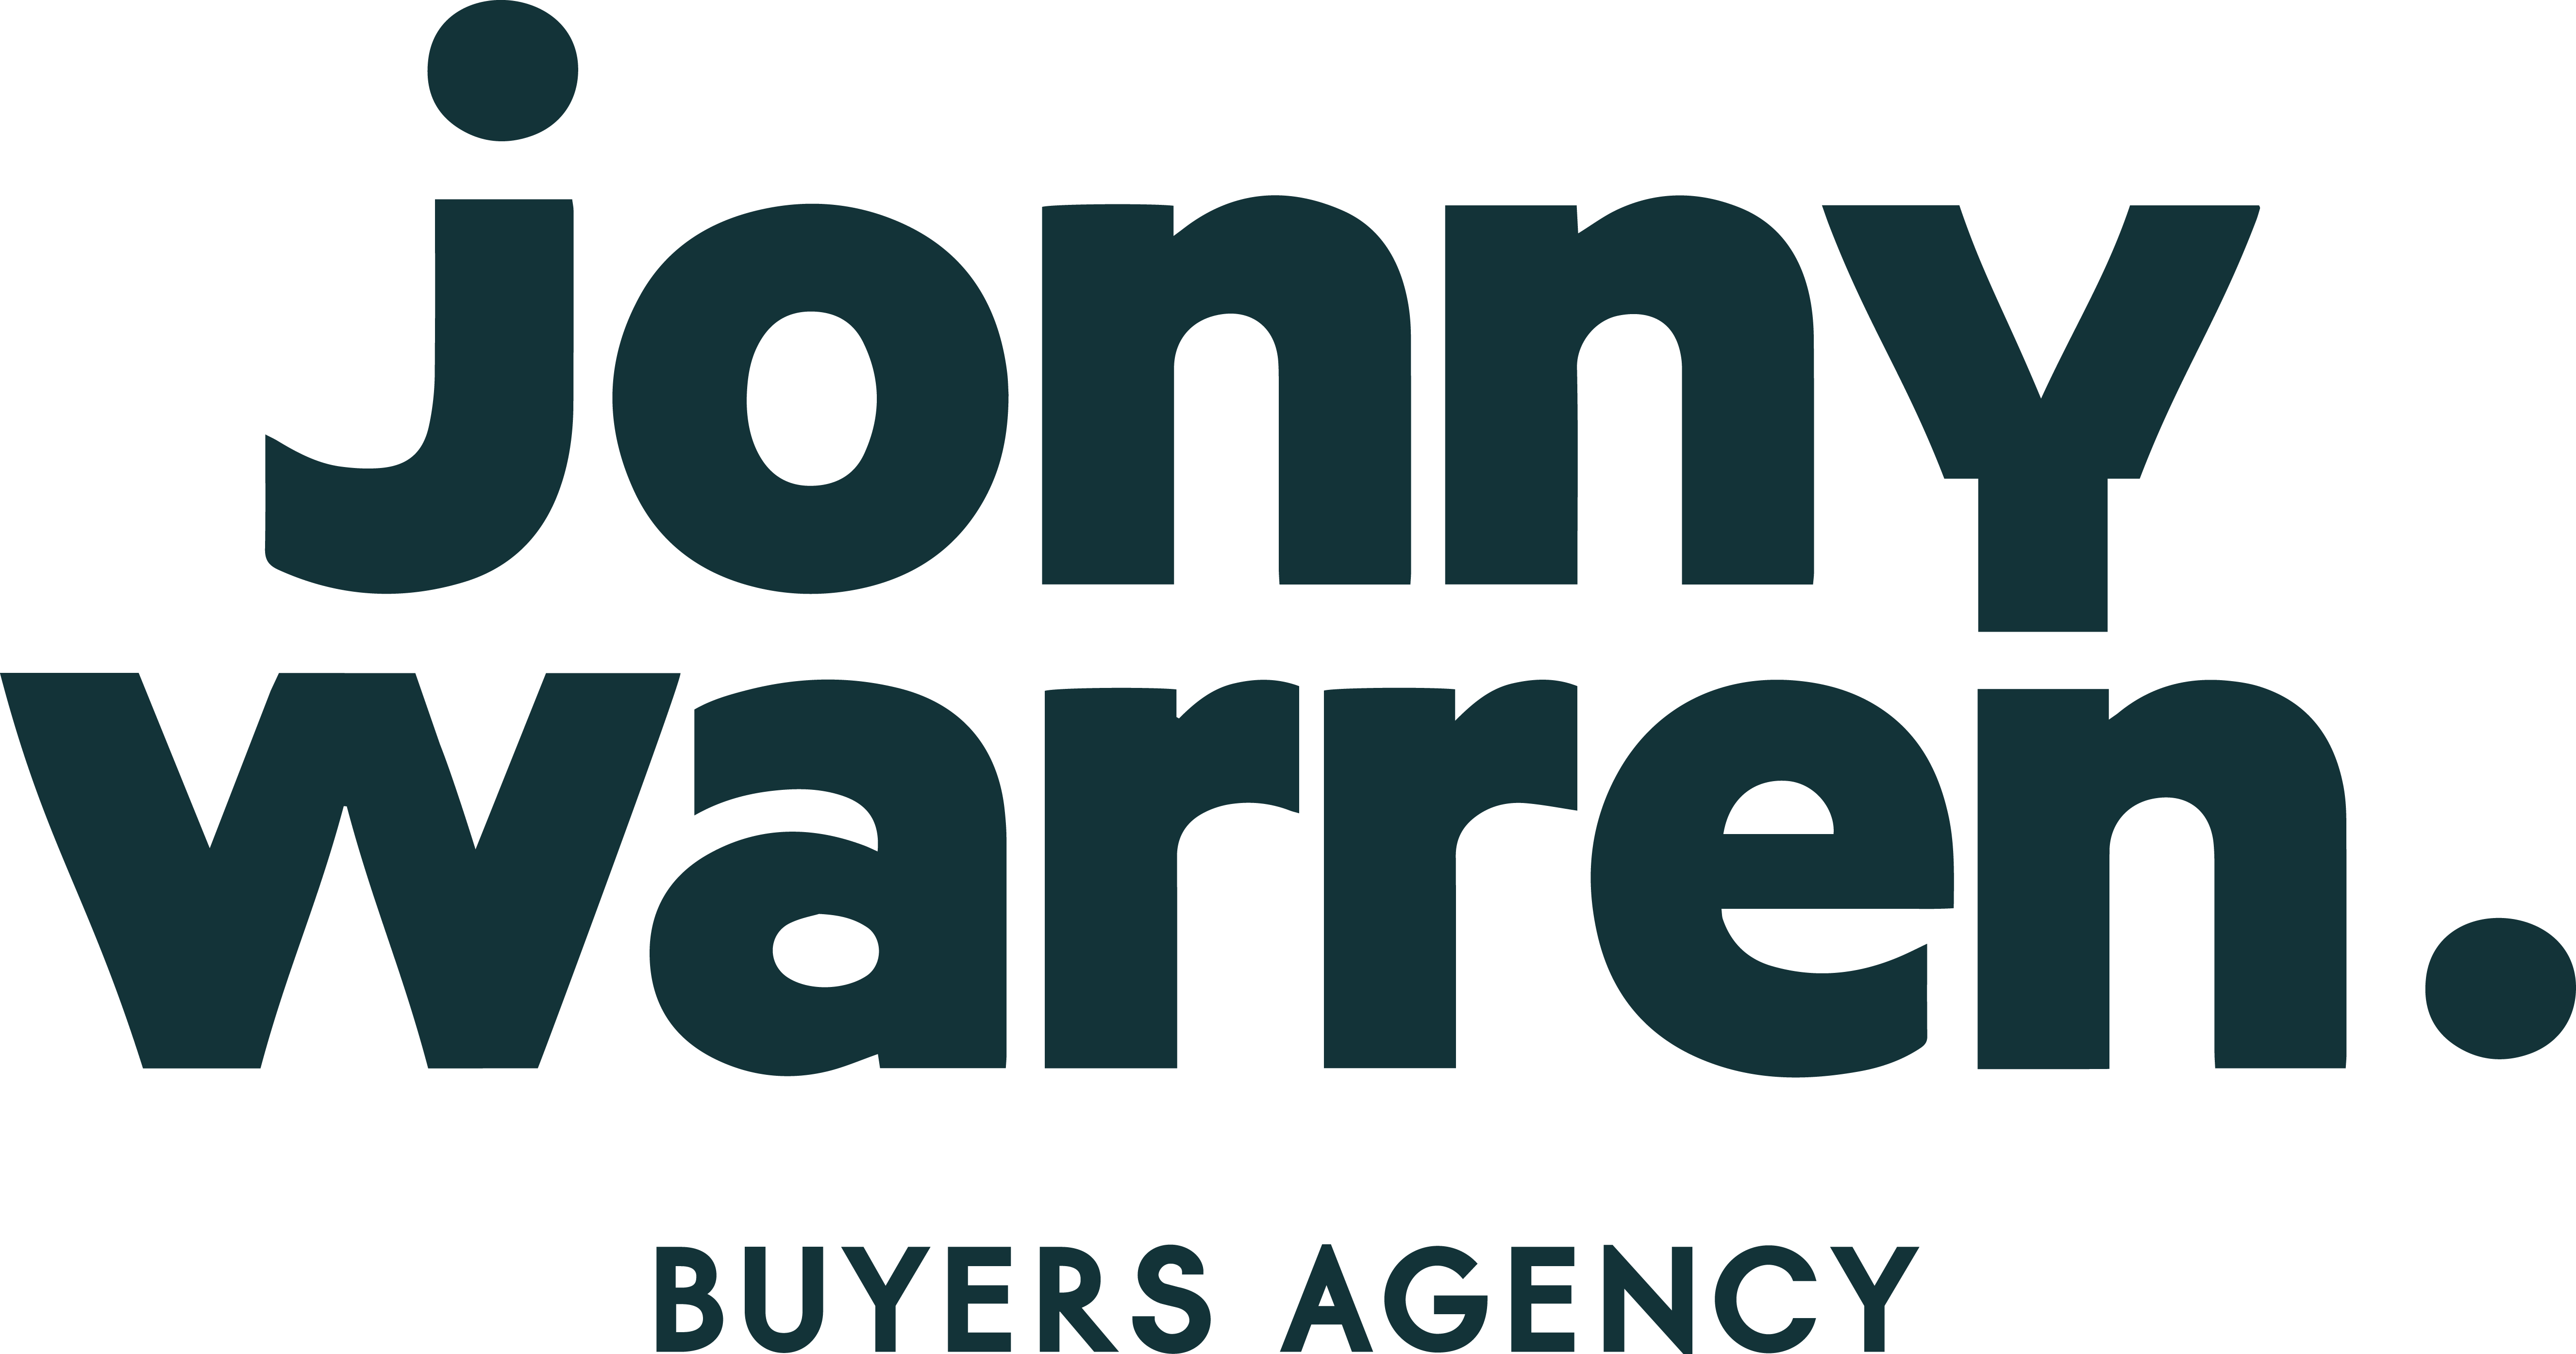 Buyers agency